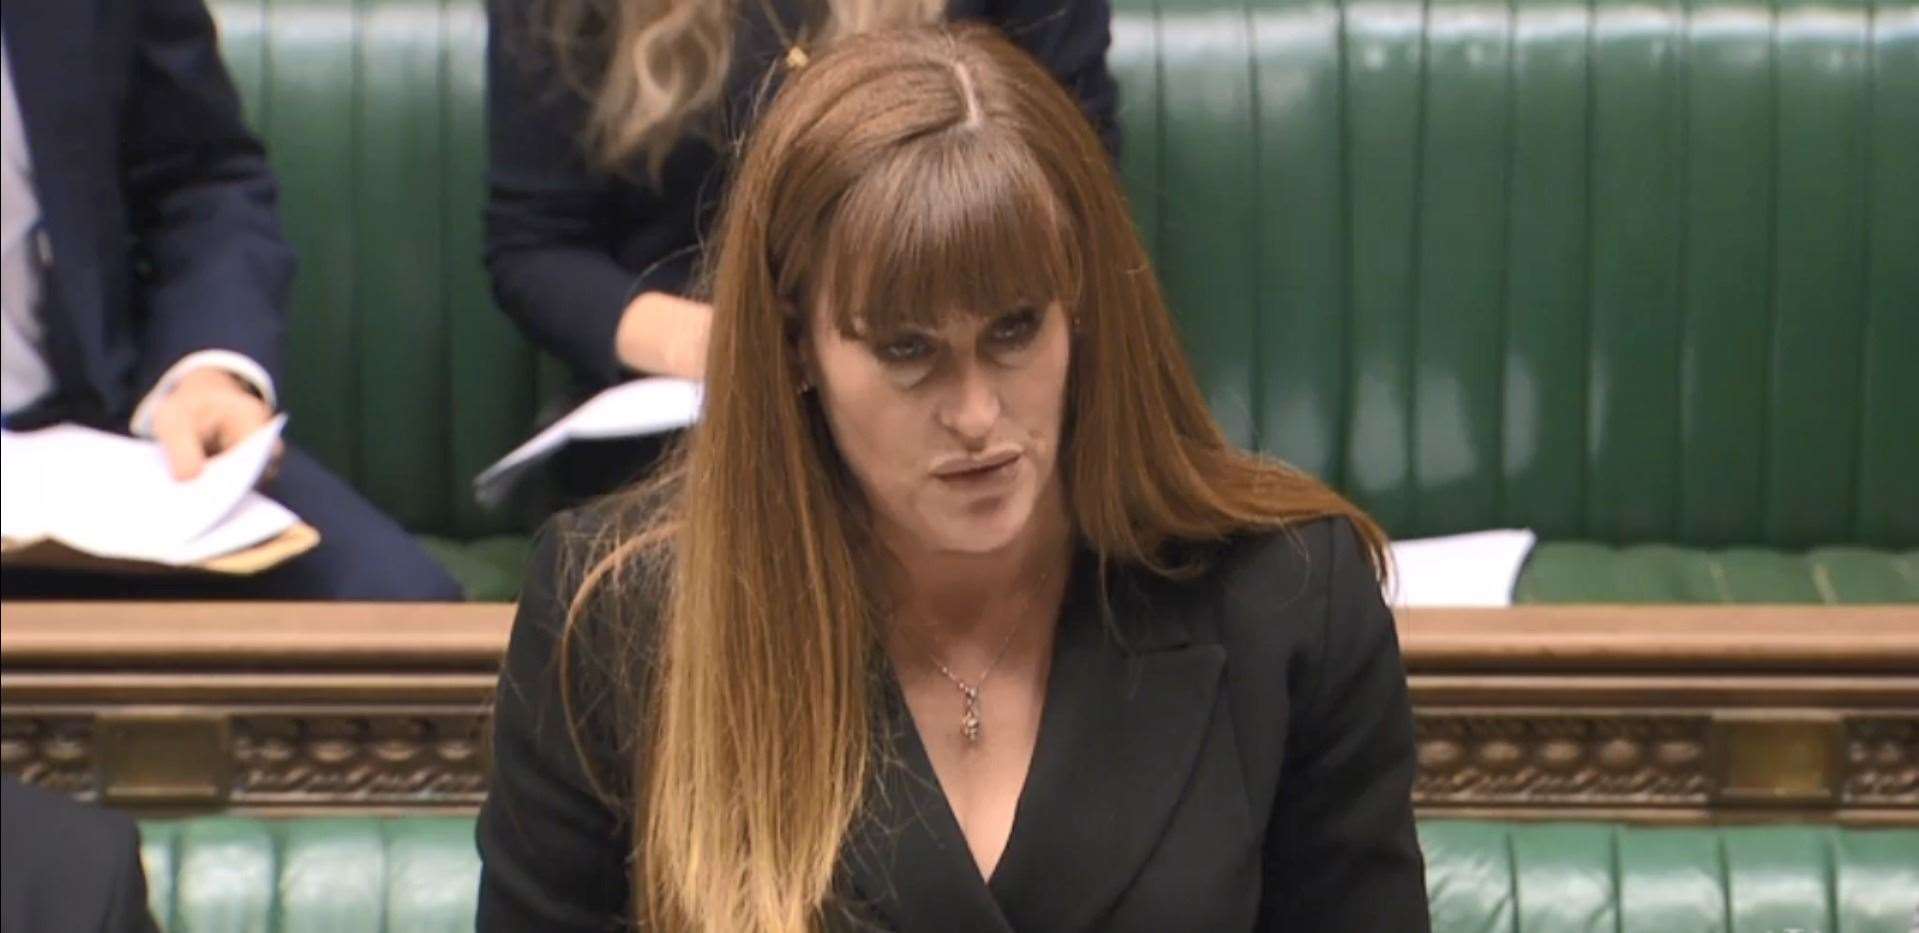 Kelly Tolhurst in Parliament